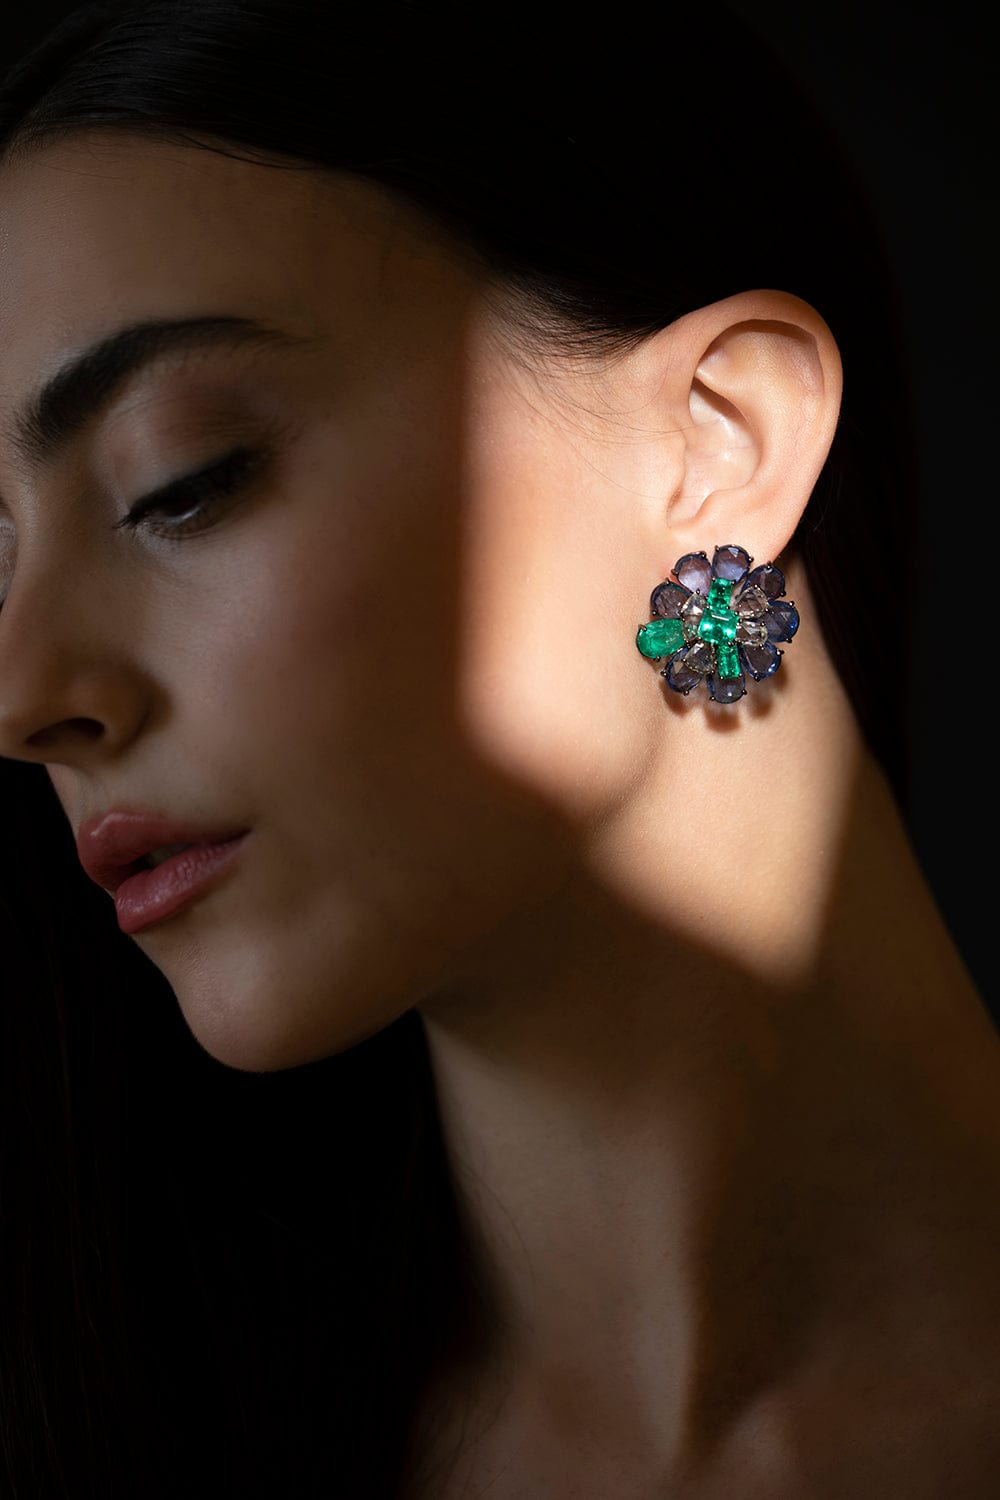 SUTRA-Emerald Blue Sapphire Flower Earrings-WHITE GOLD